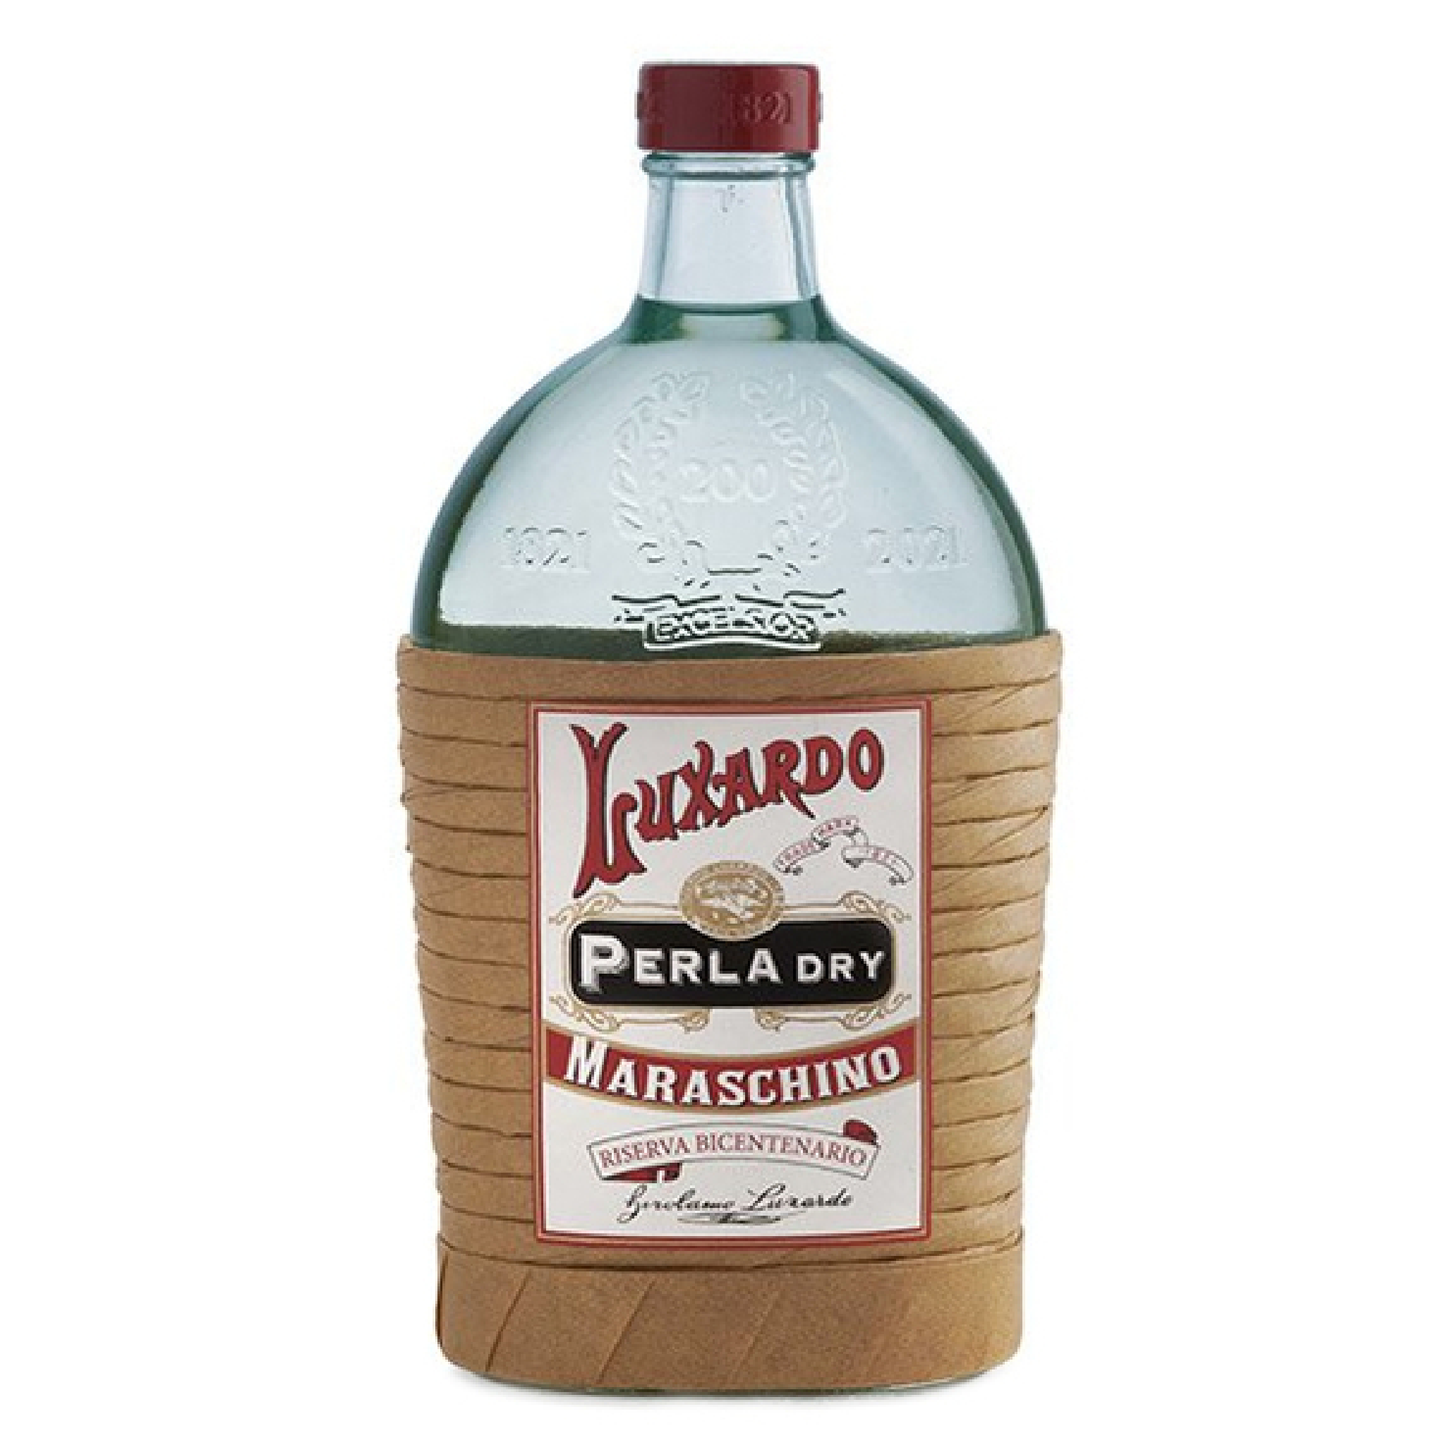 Luxardo Maraschino Perla Dry - Liquor Geeks